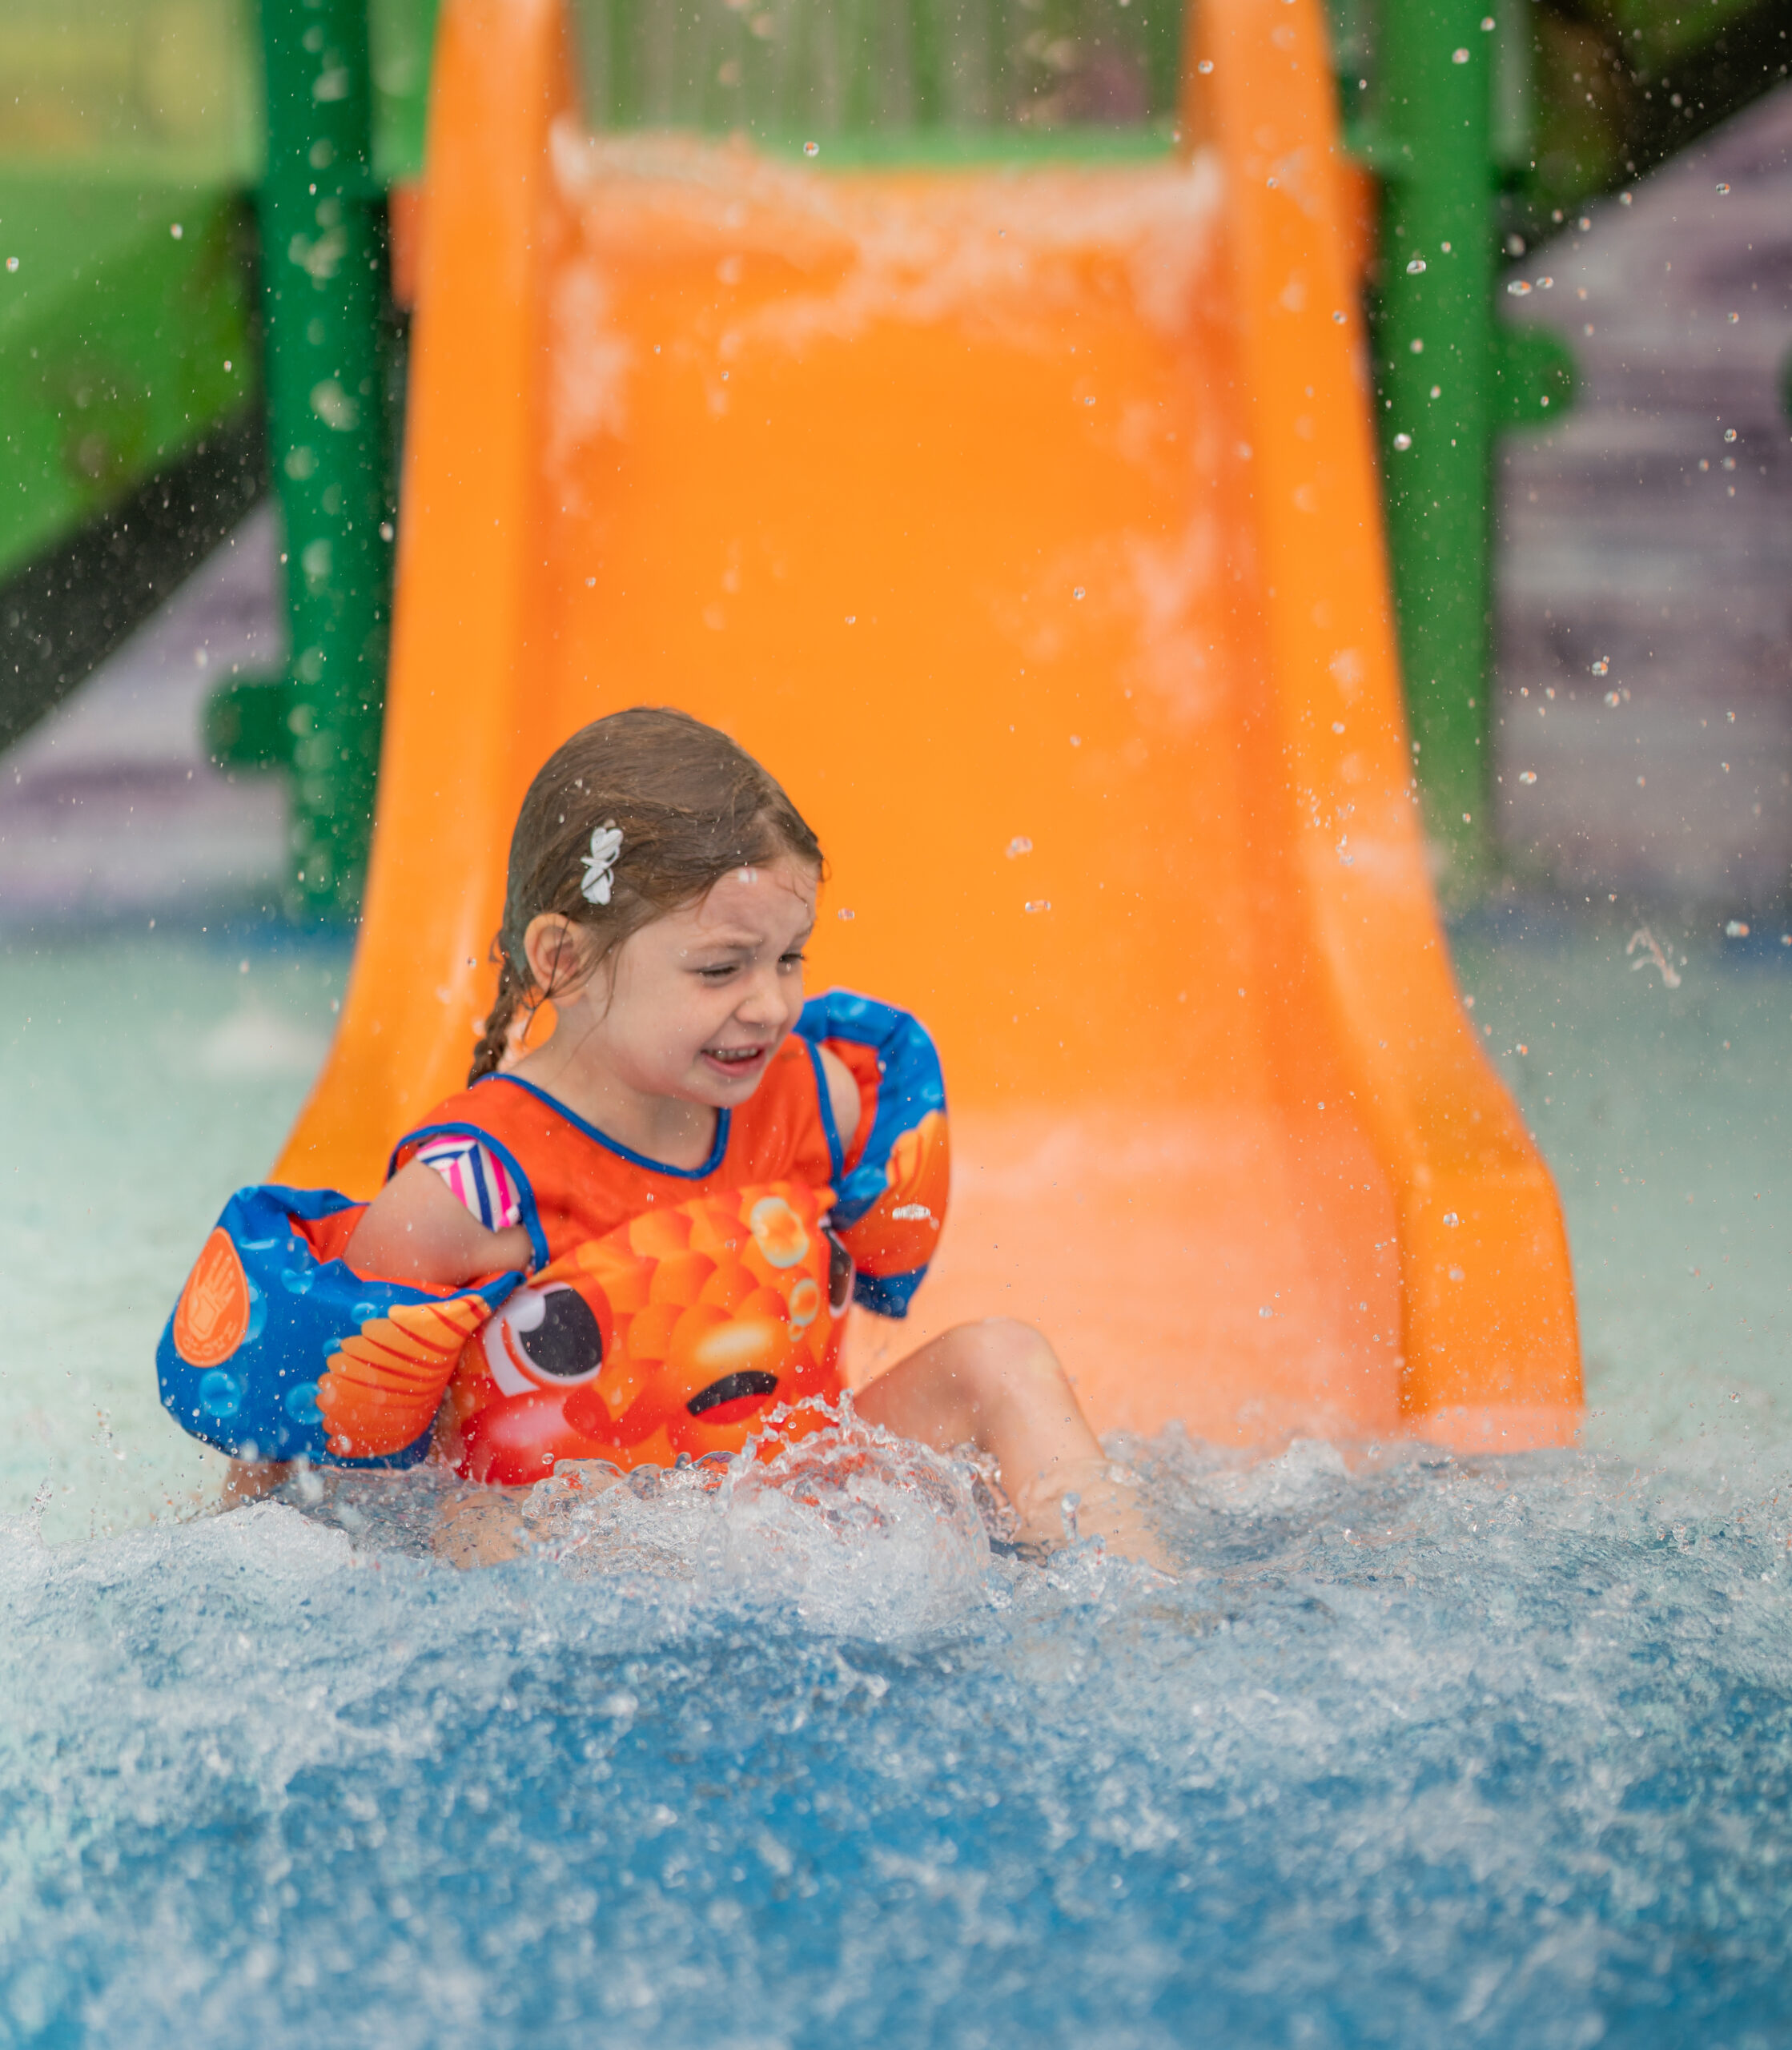 Kiddo comes down the orange slide in the Kiddie Pool at The Waterpark.